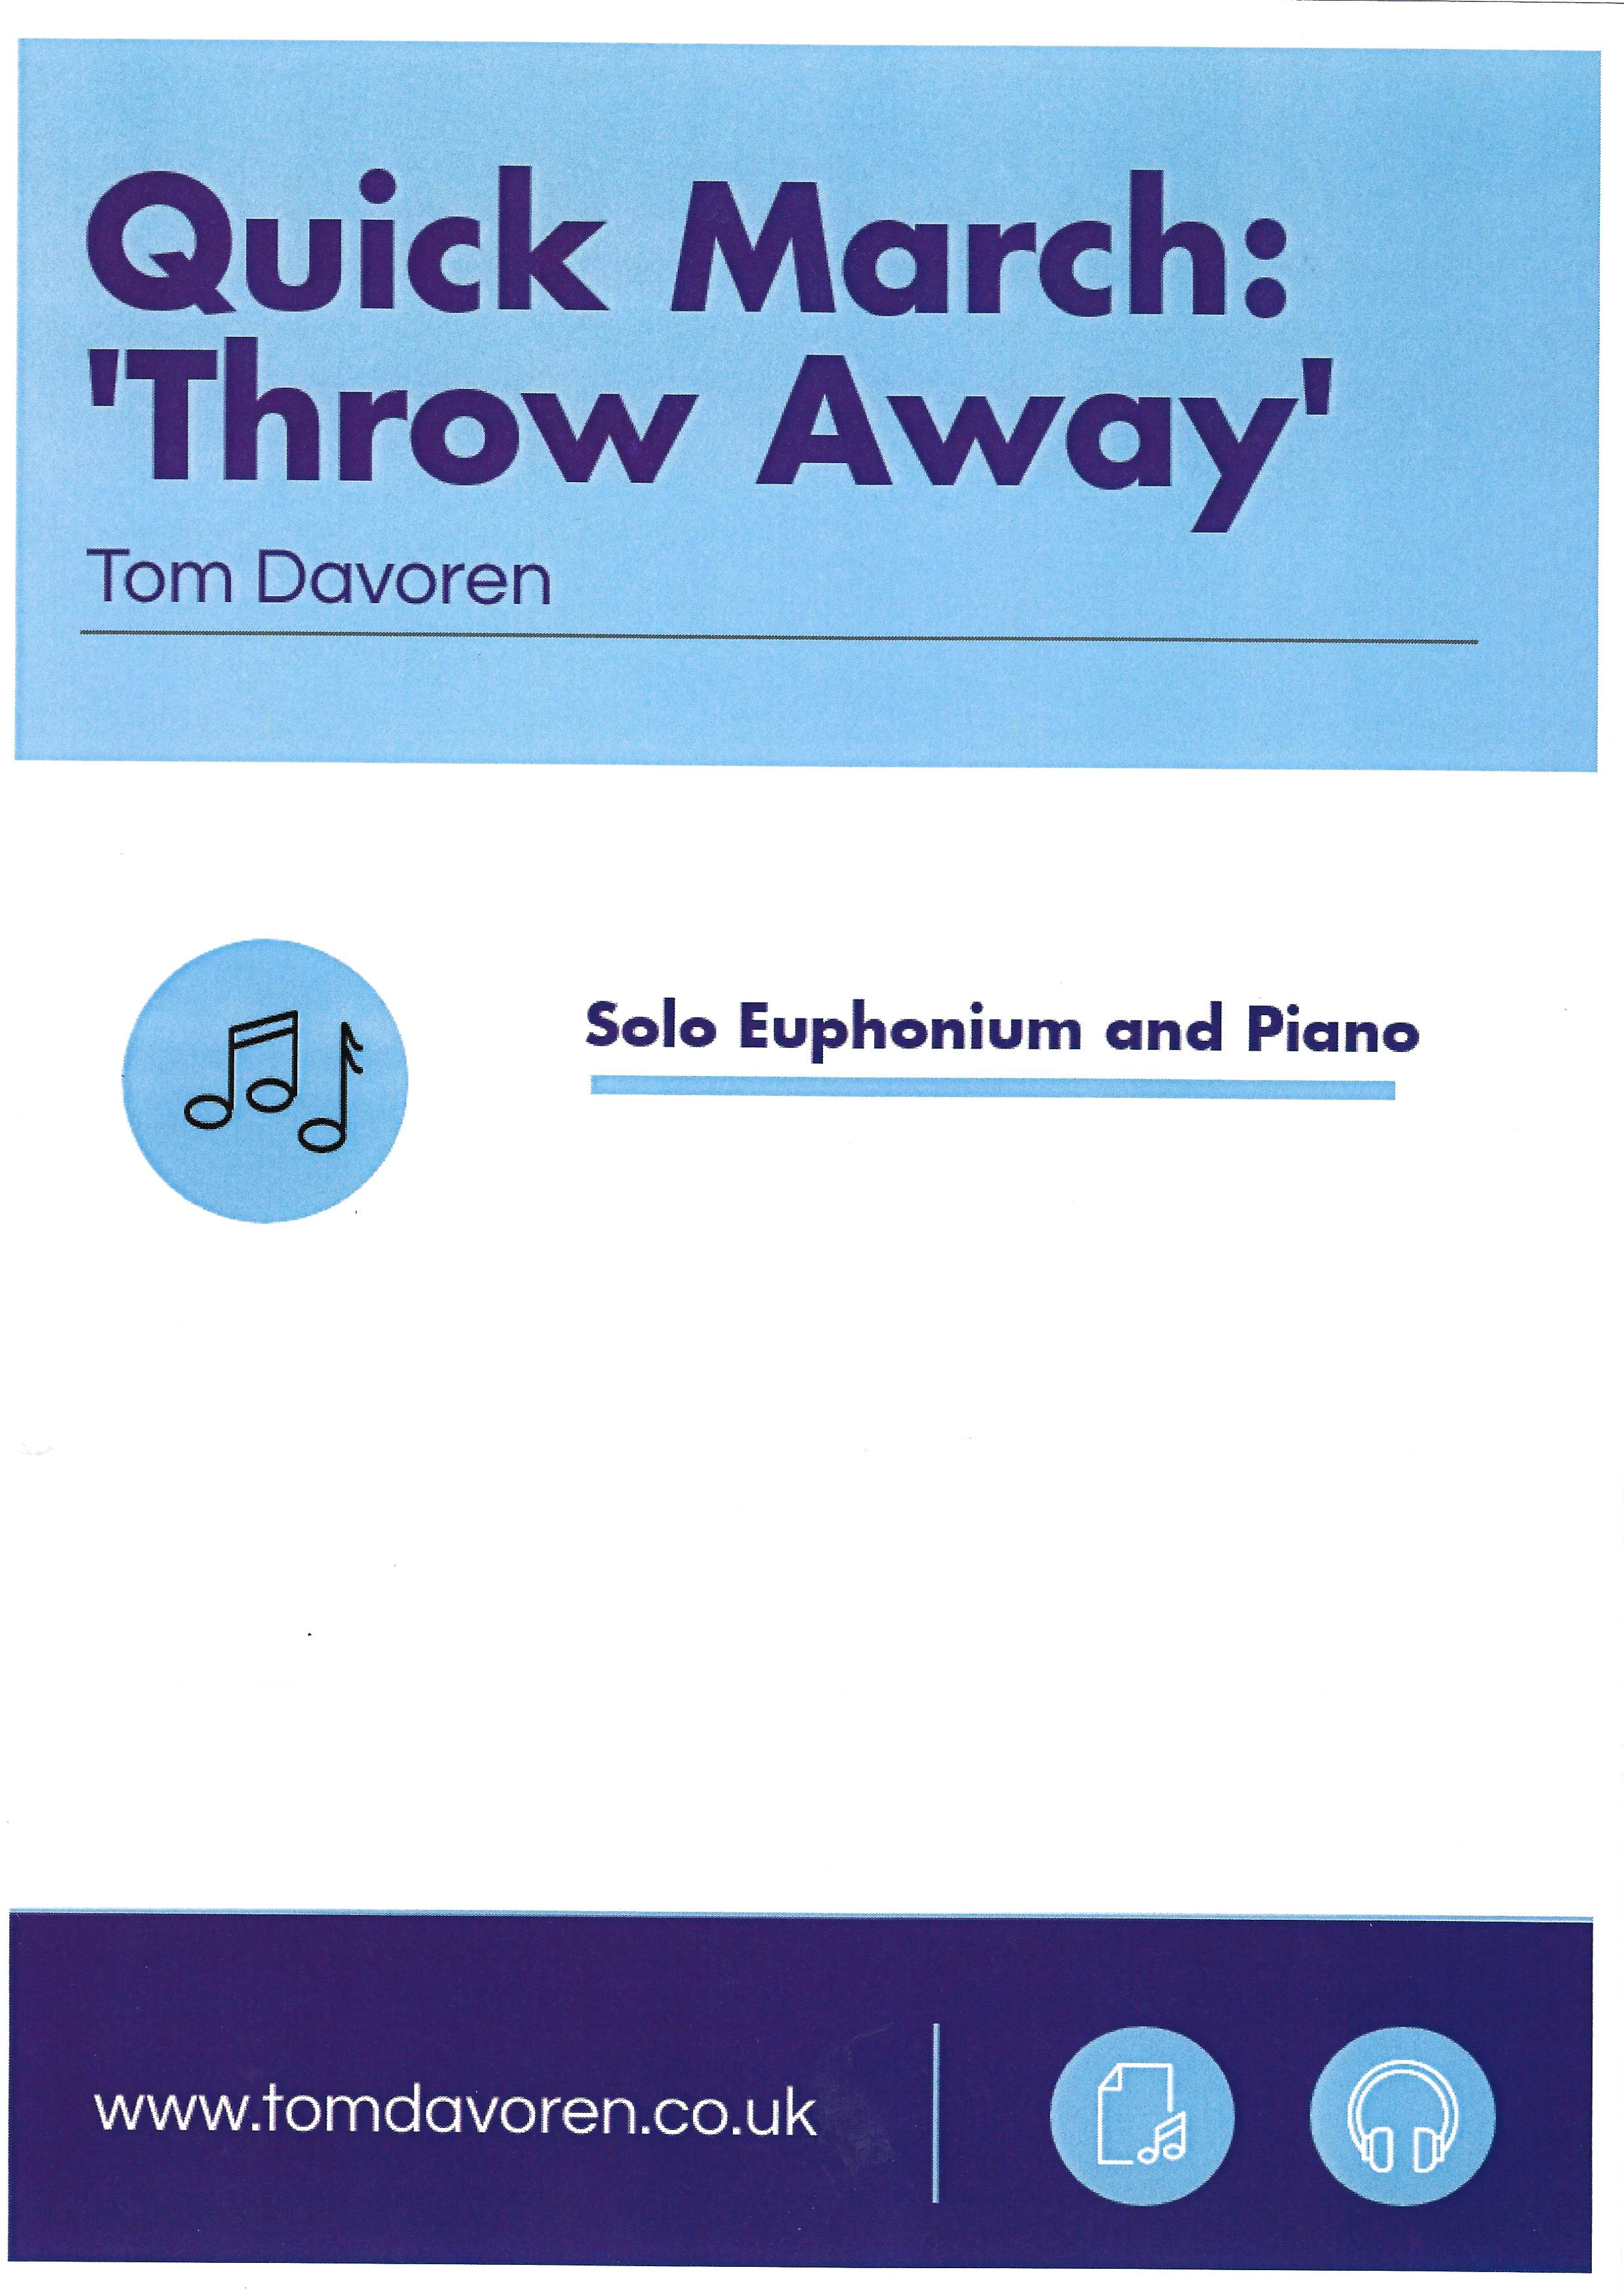 Quick March: 'Throw Away' - Tom Davoren - Euphonium and Piano